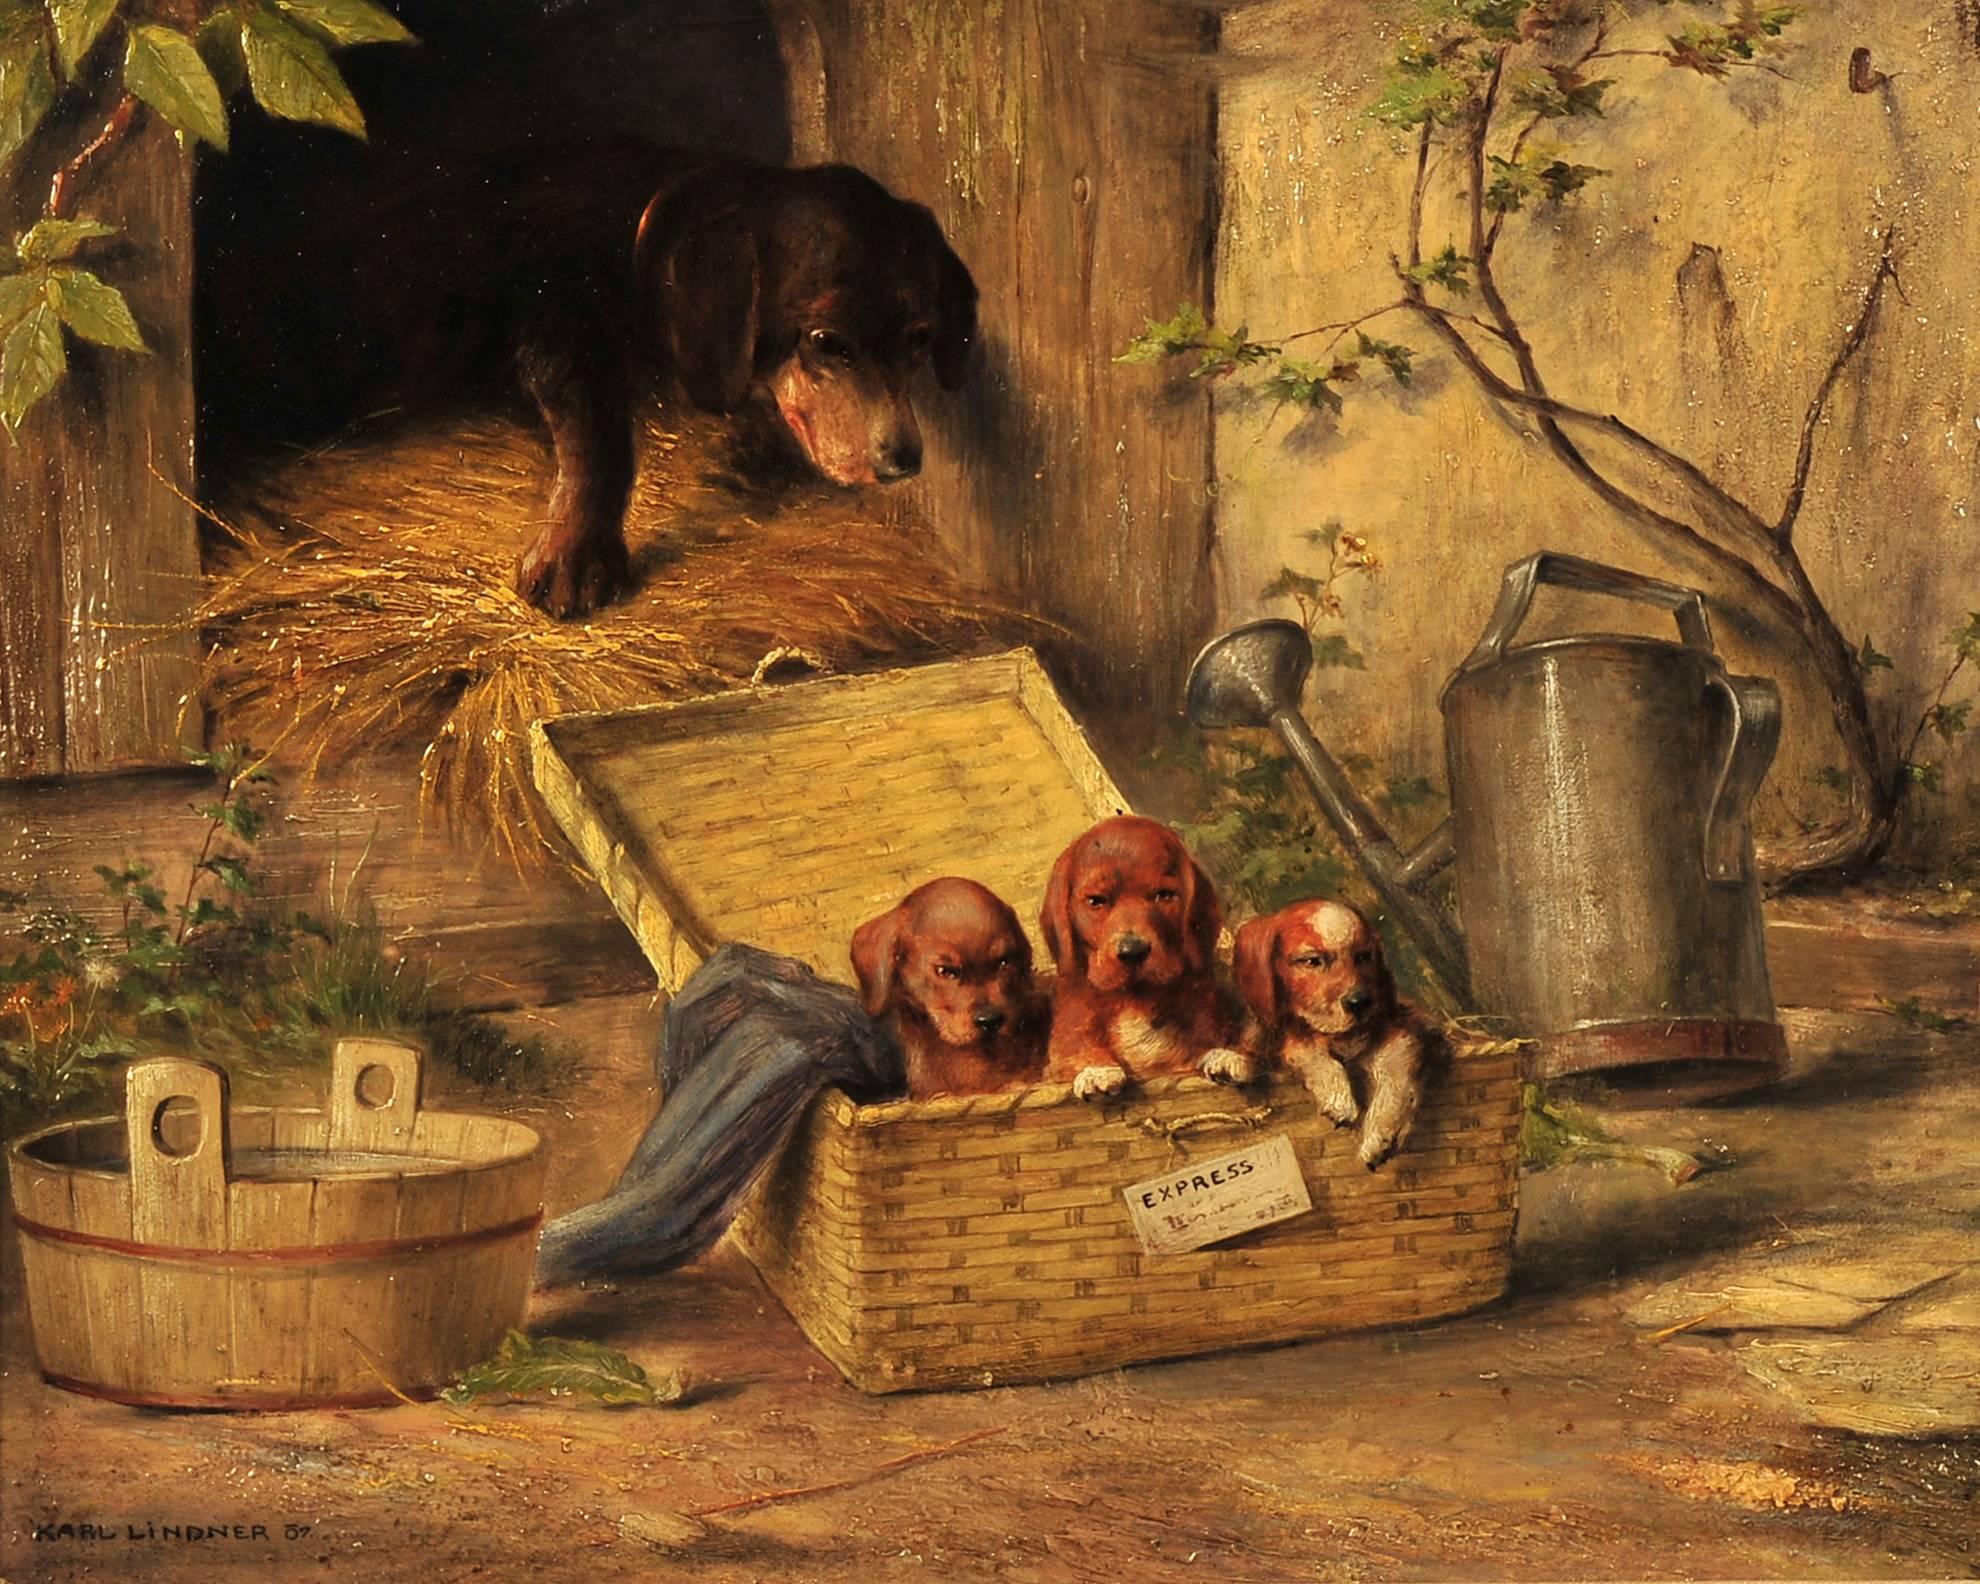 Animal Painting Karl Lindner (b.1871) - Trois articles dans le panier